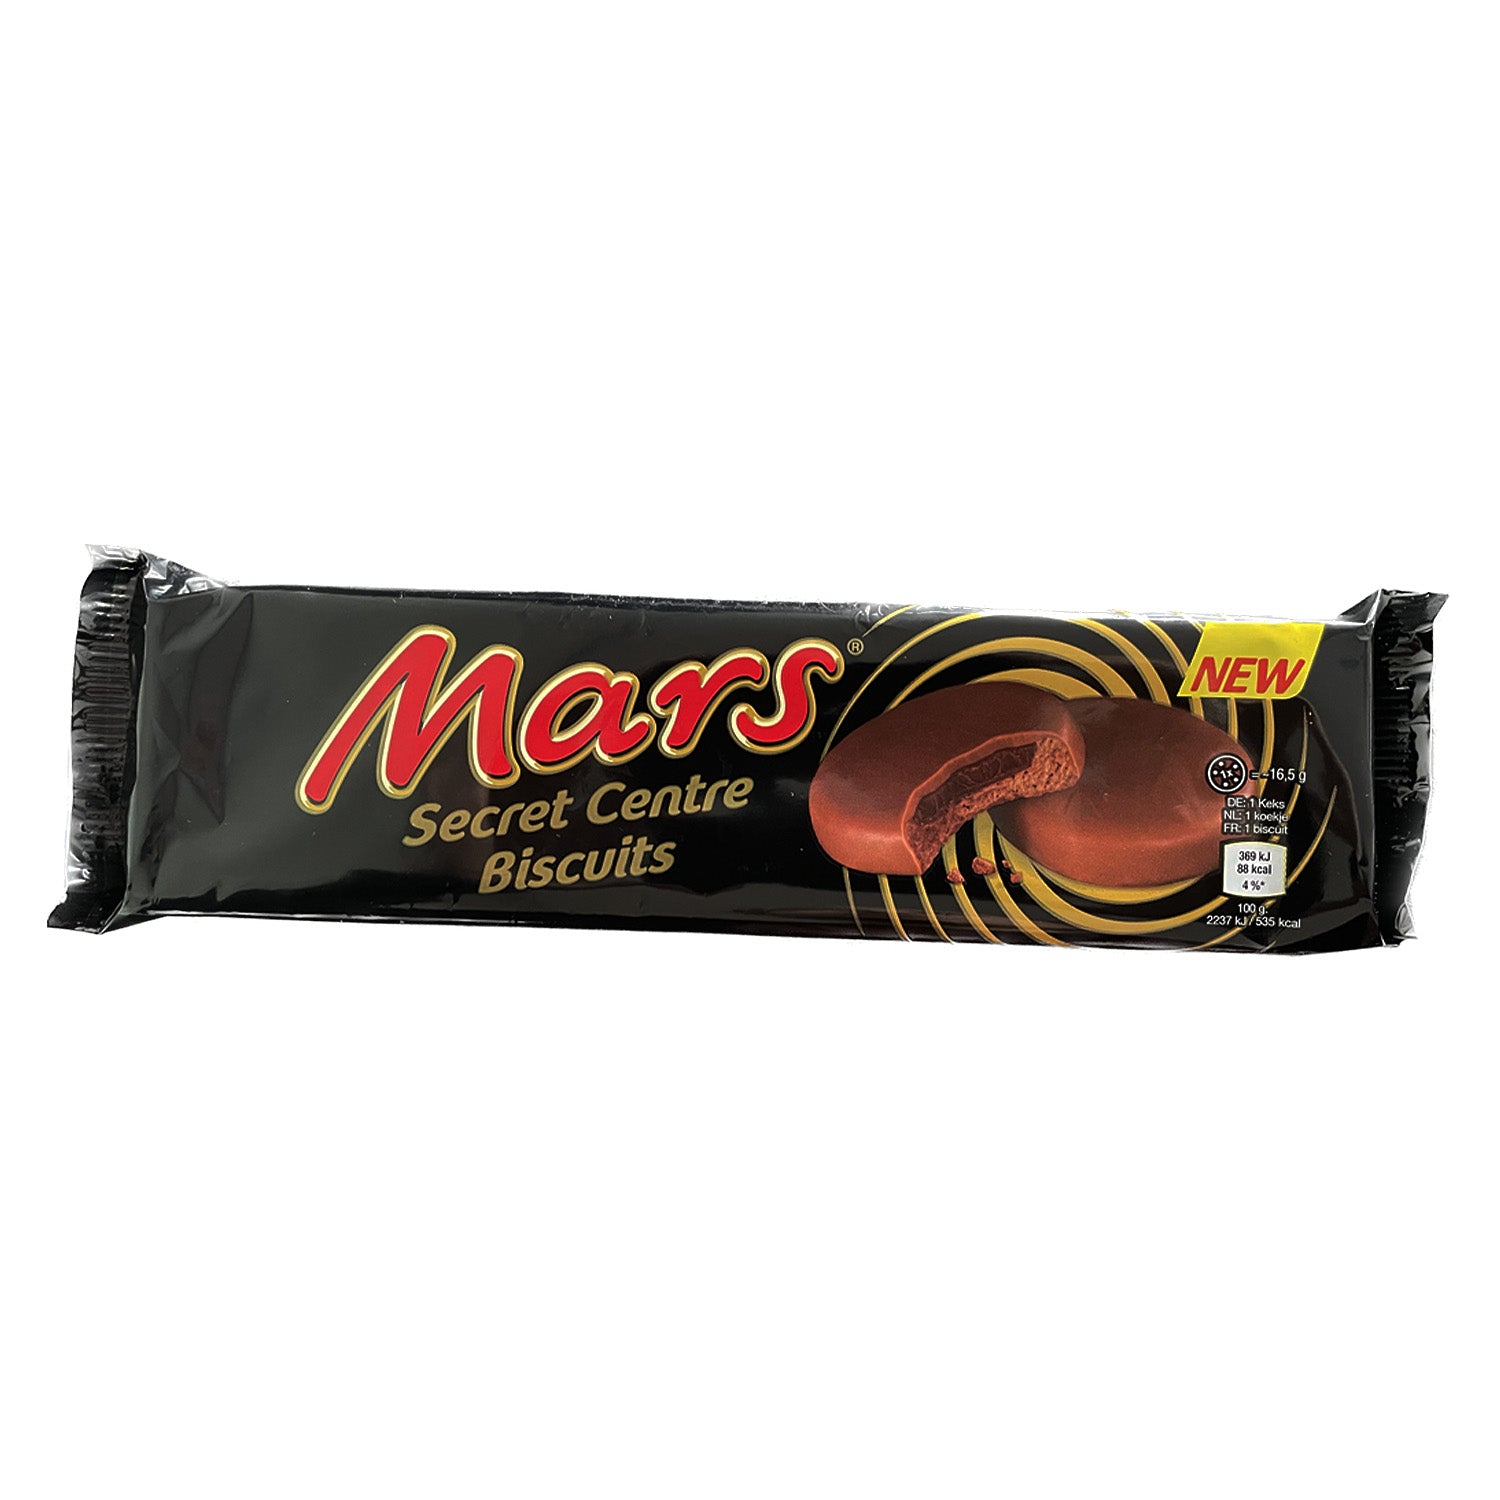 pack of Mars Secret Centre Biscuits, 100g